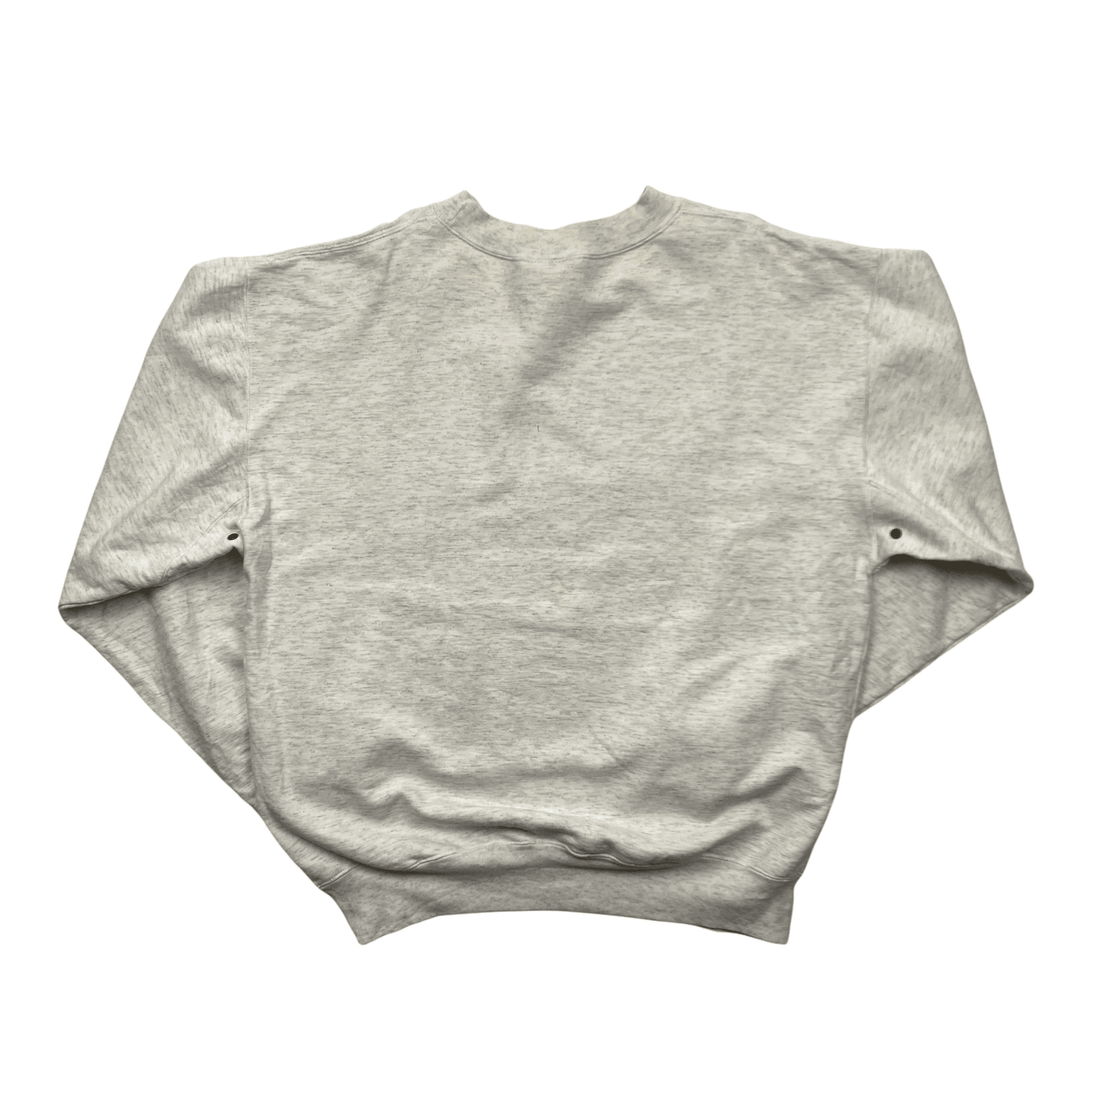 Vintage 90s Grey Timberland Spell-Out Sweatshirt - Large - The Streetwear Studio